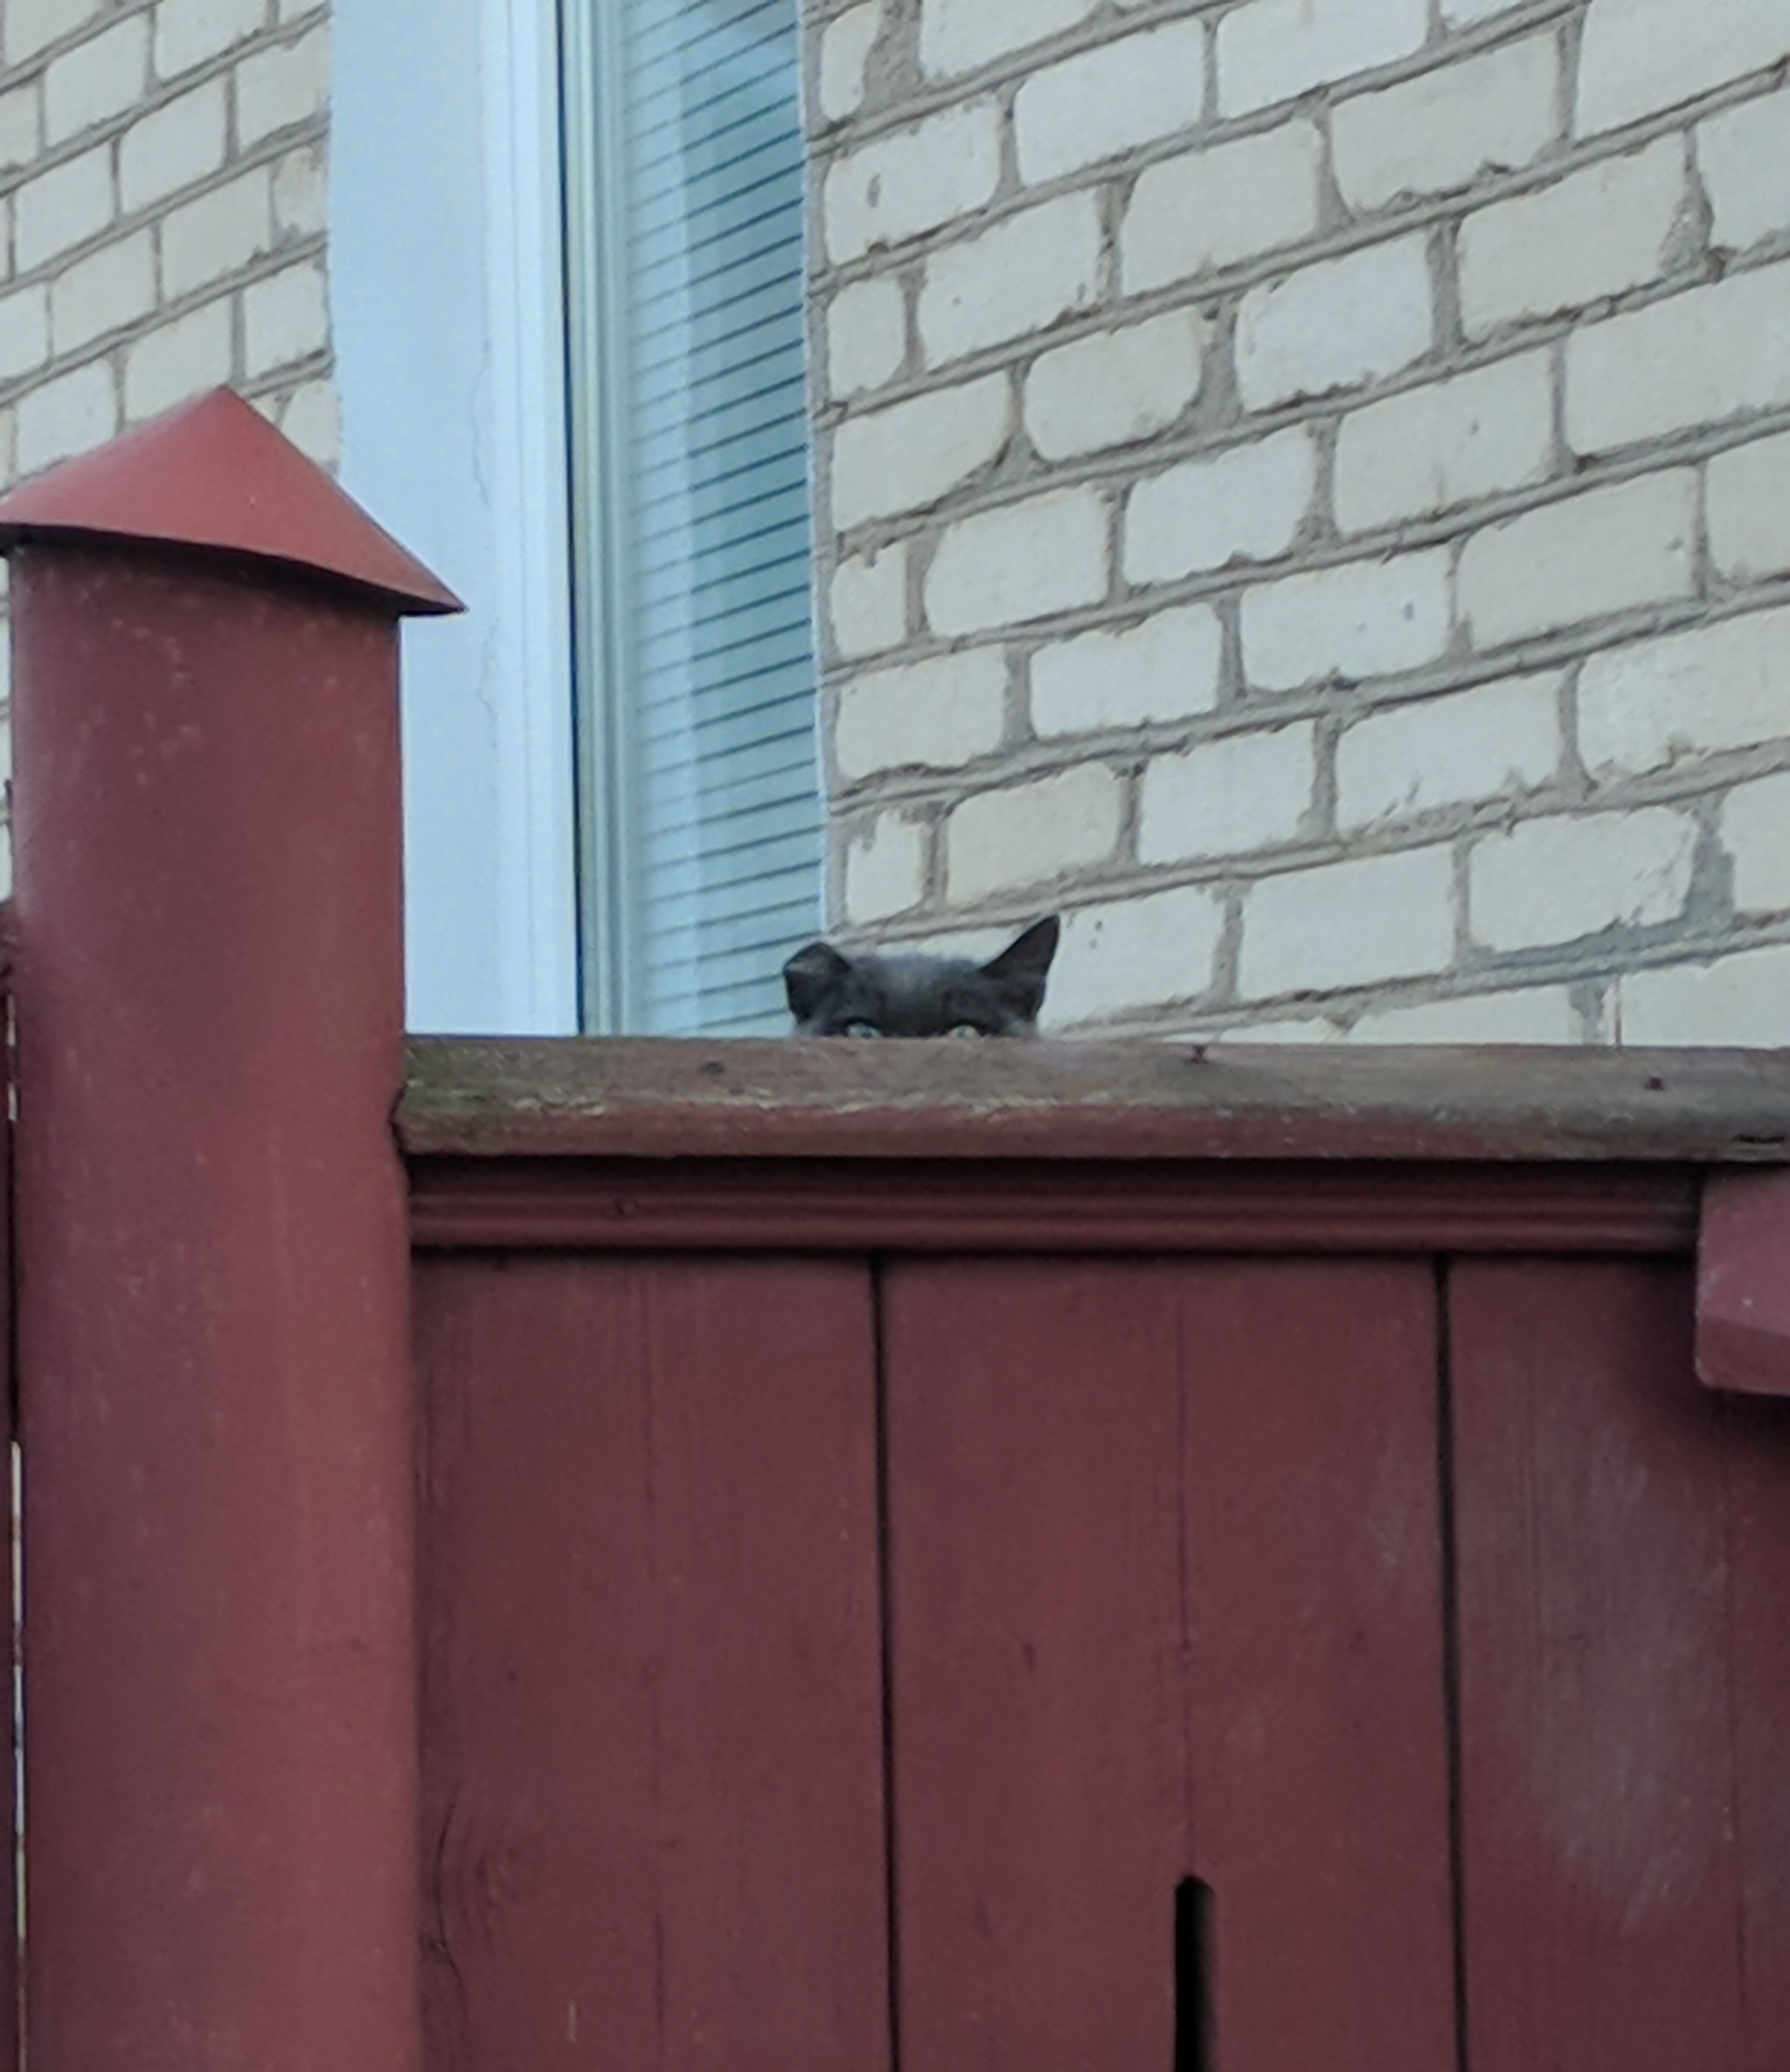 Surveillance, level Cat. - My, cat, Surveillance